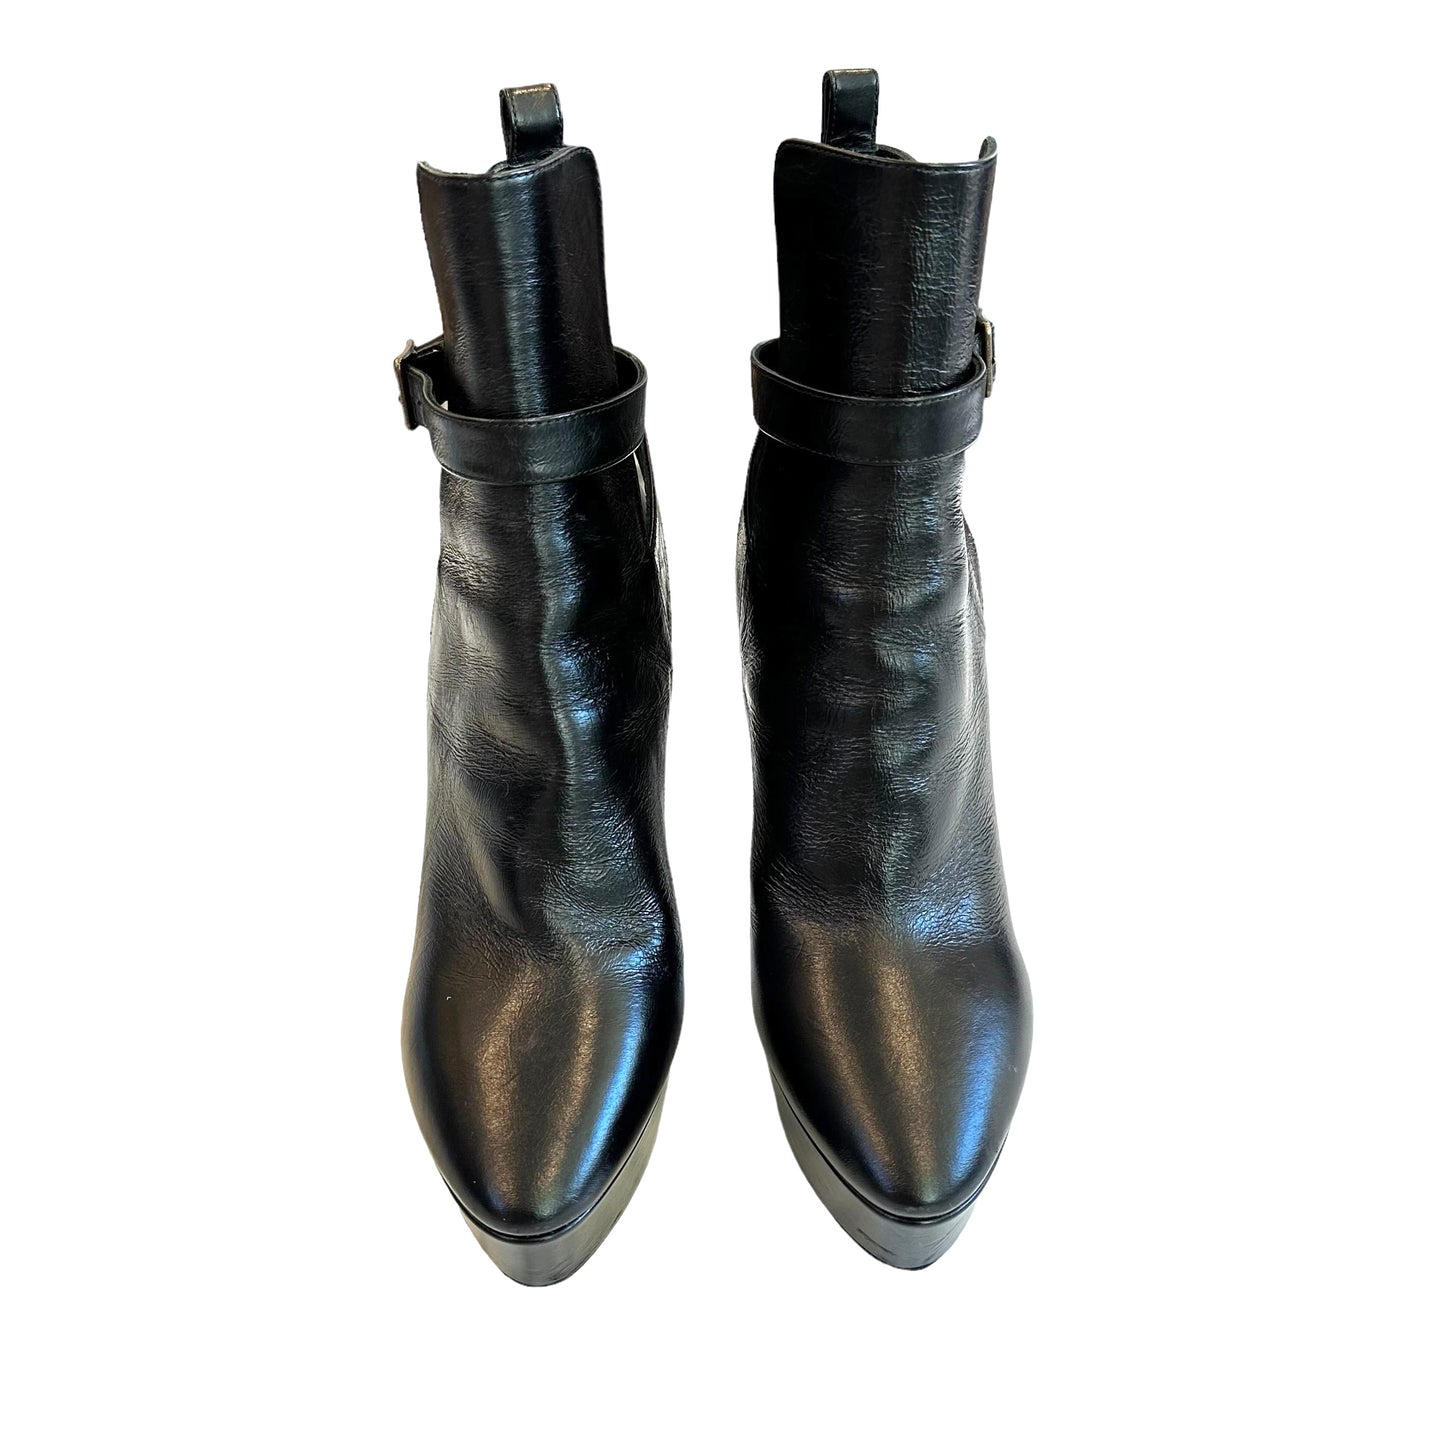 Black Heeled Boots - 6